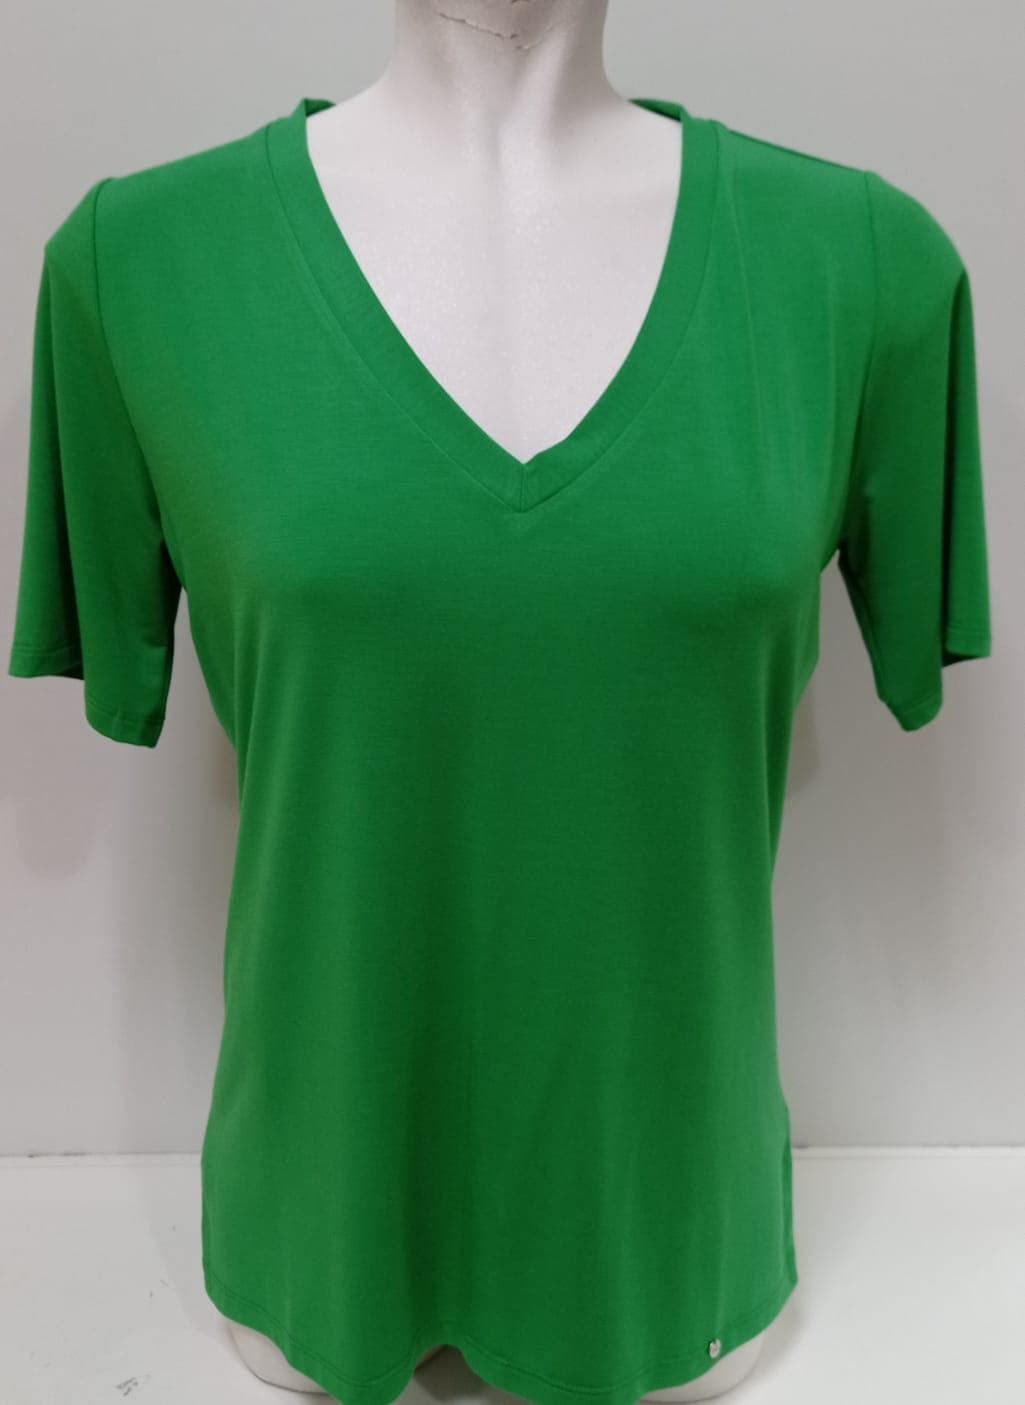 Camiseta verde - Imagen 1